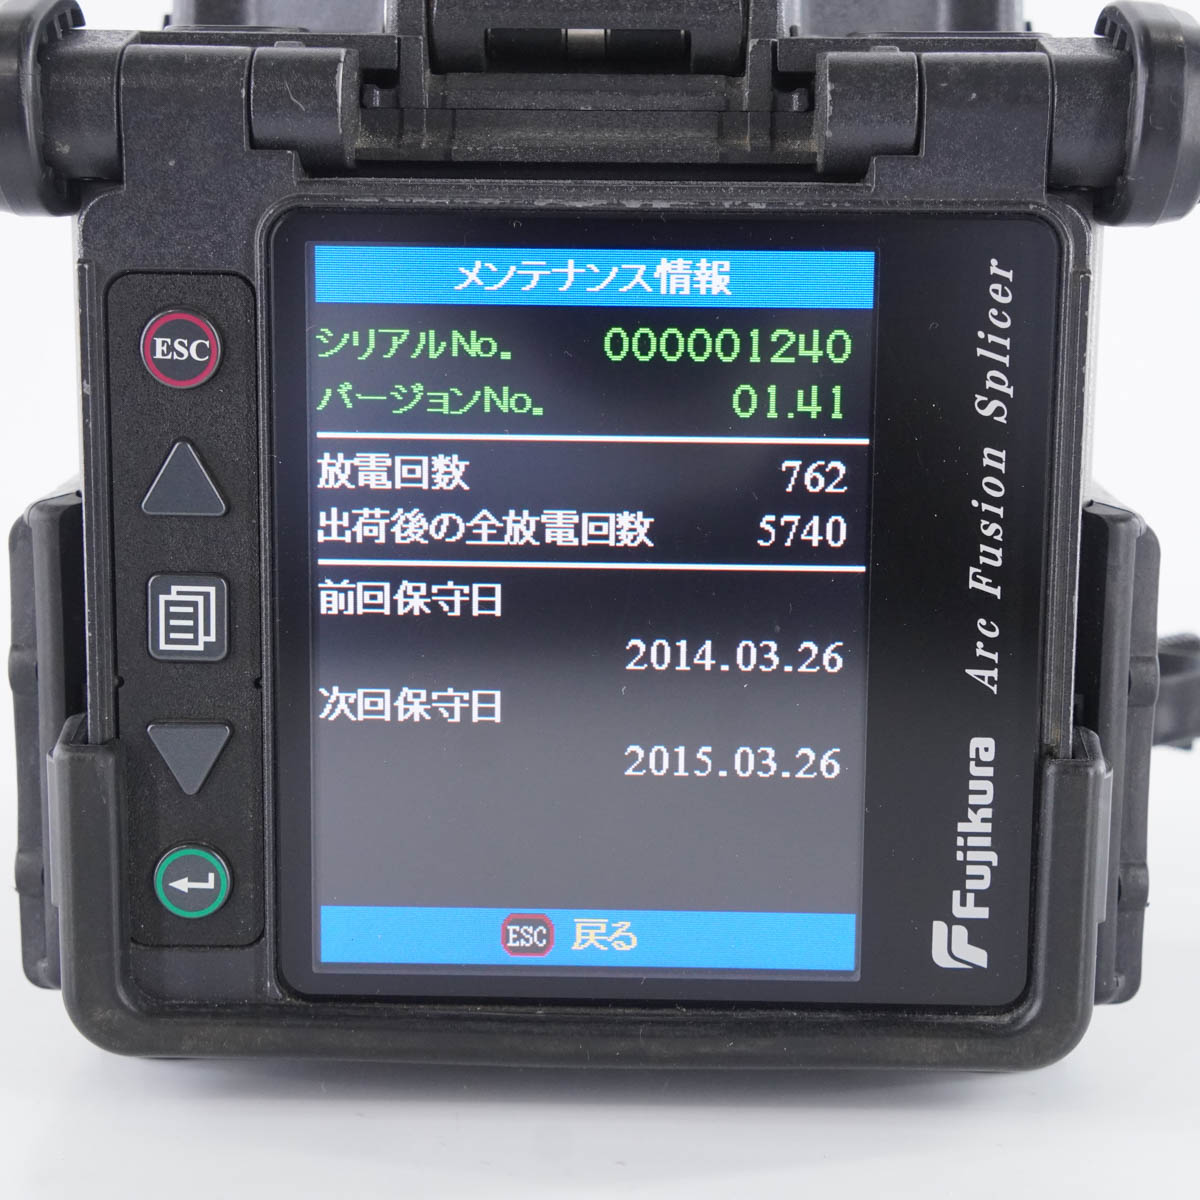 DW]USED 8日保証 全放電5740回 Fujikura FSM-60R 光ファイバ融着接続機